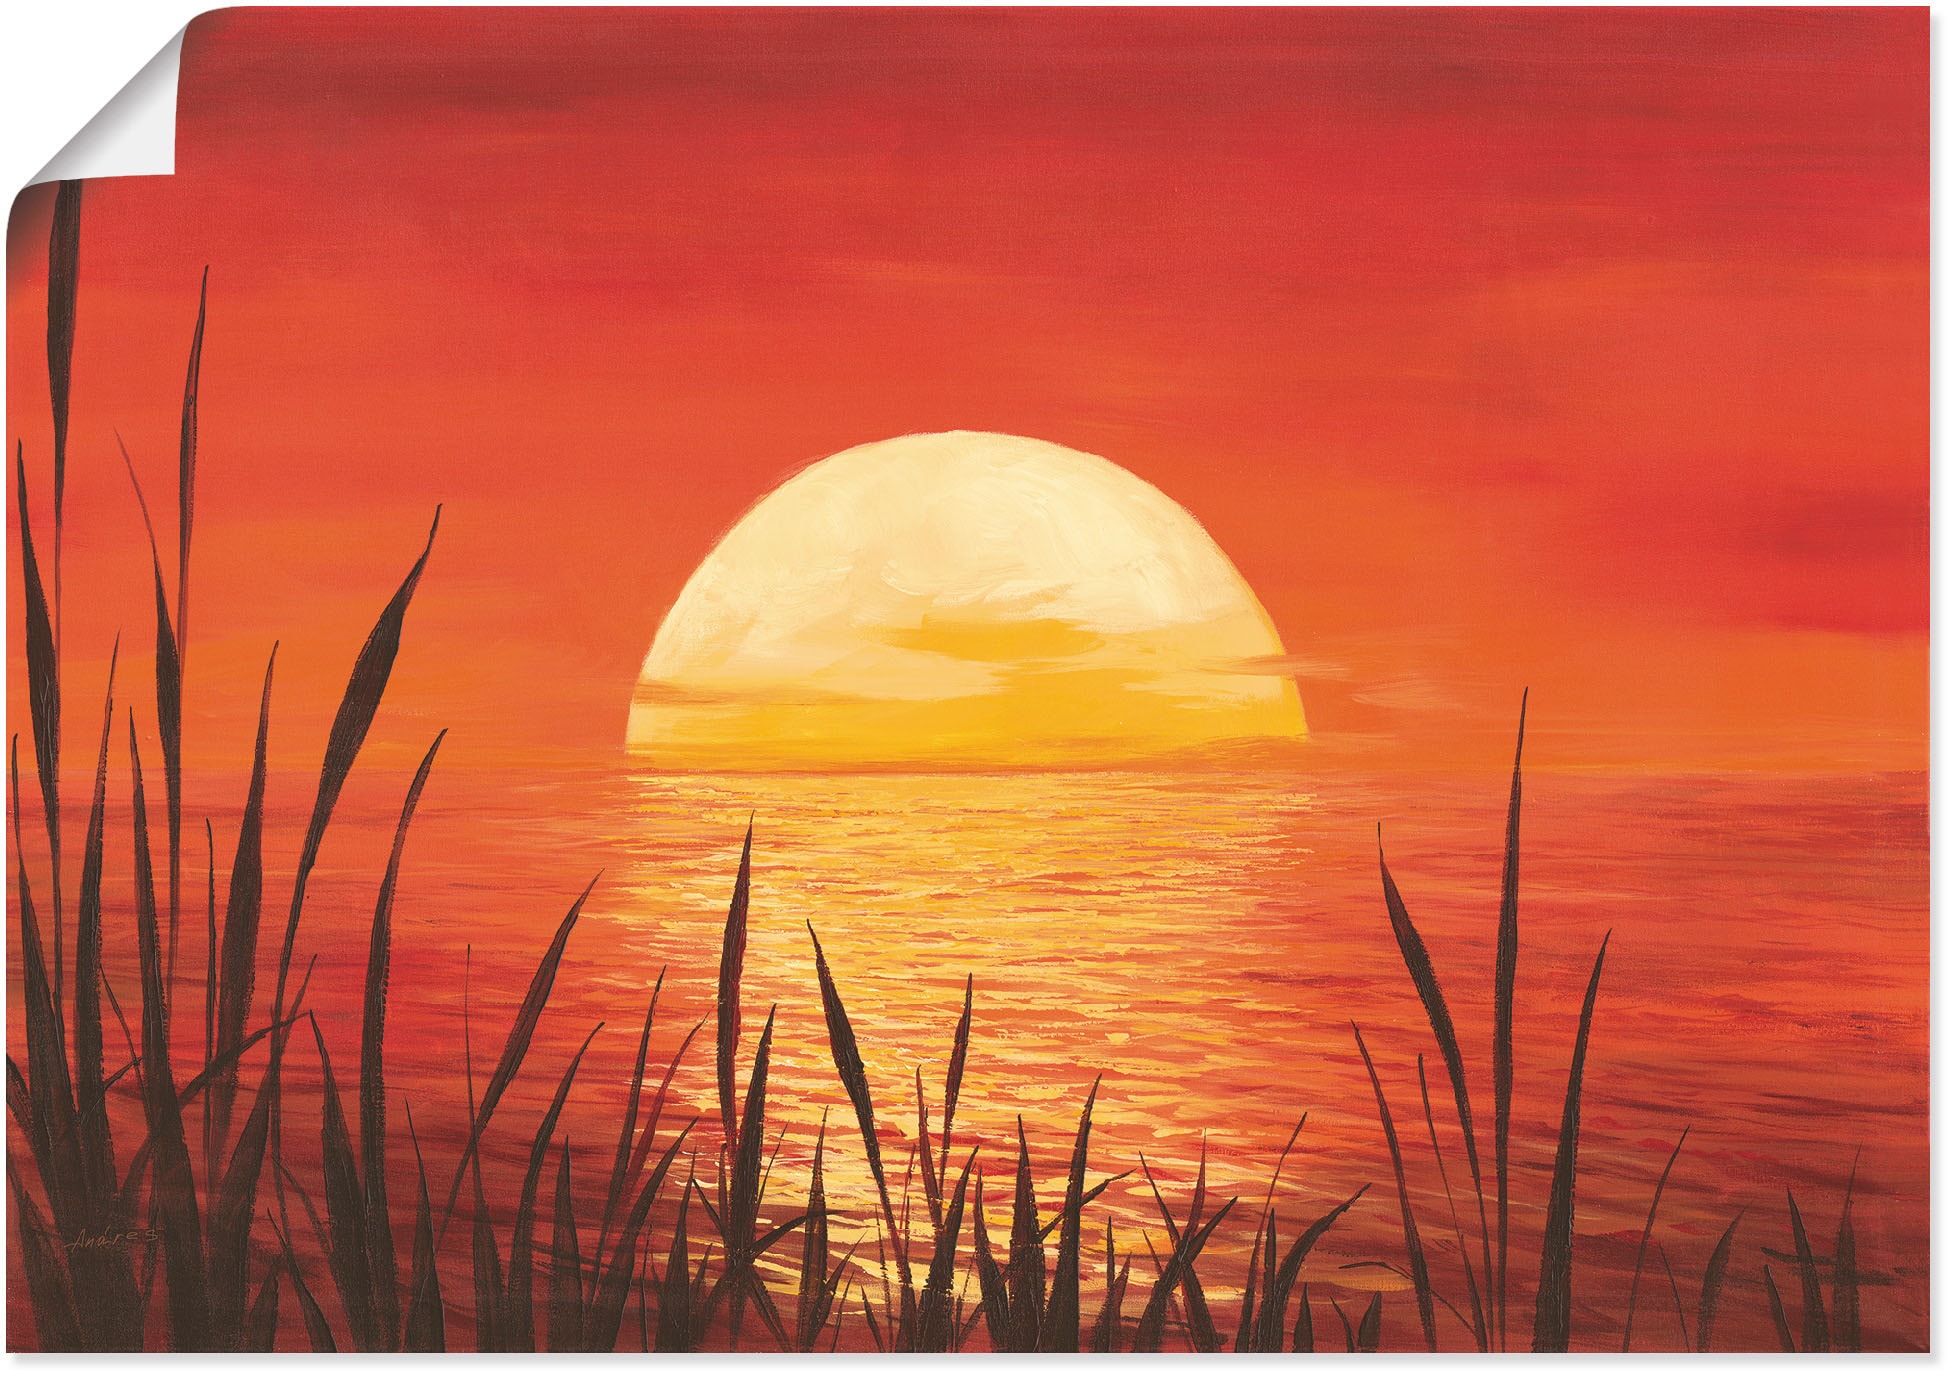 Artland Wandbild »Roter Sonnenuntergang am Ozean«, Bilder vom Sonnenuntergang & -aufgang (1 Stück), in vielen Größen & Produktarten - Alubild / Outdoorbild, Leinwandbild, Poster, Wandaufkleber / Wandtattoo auch für Badezimmer geeignet